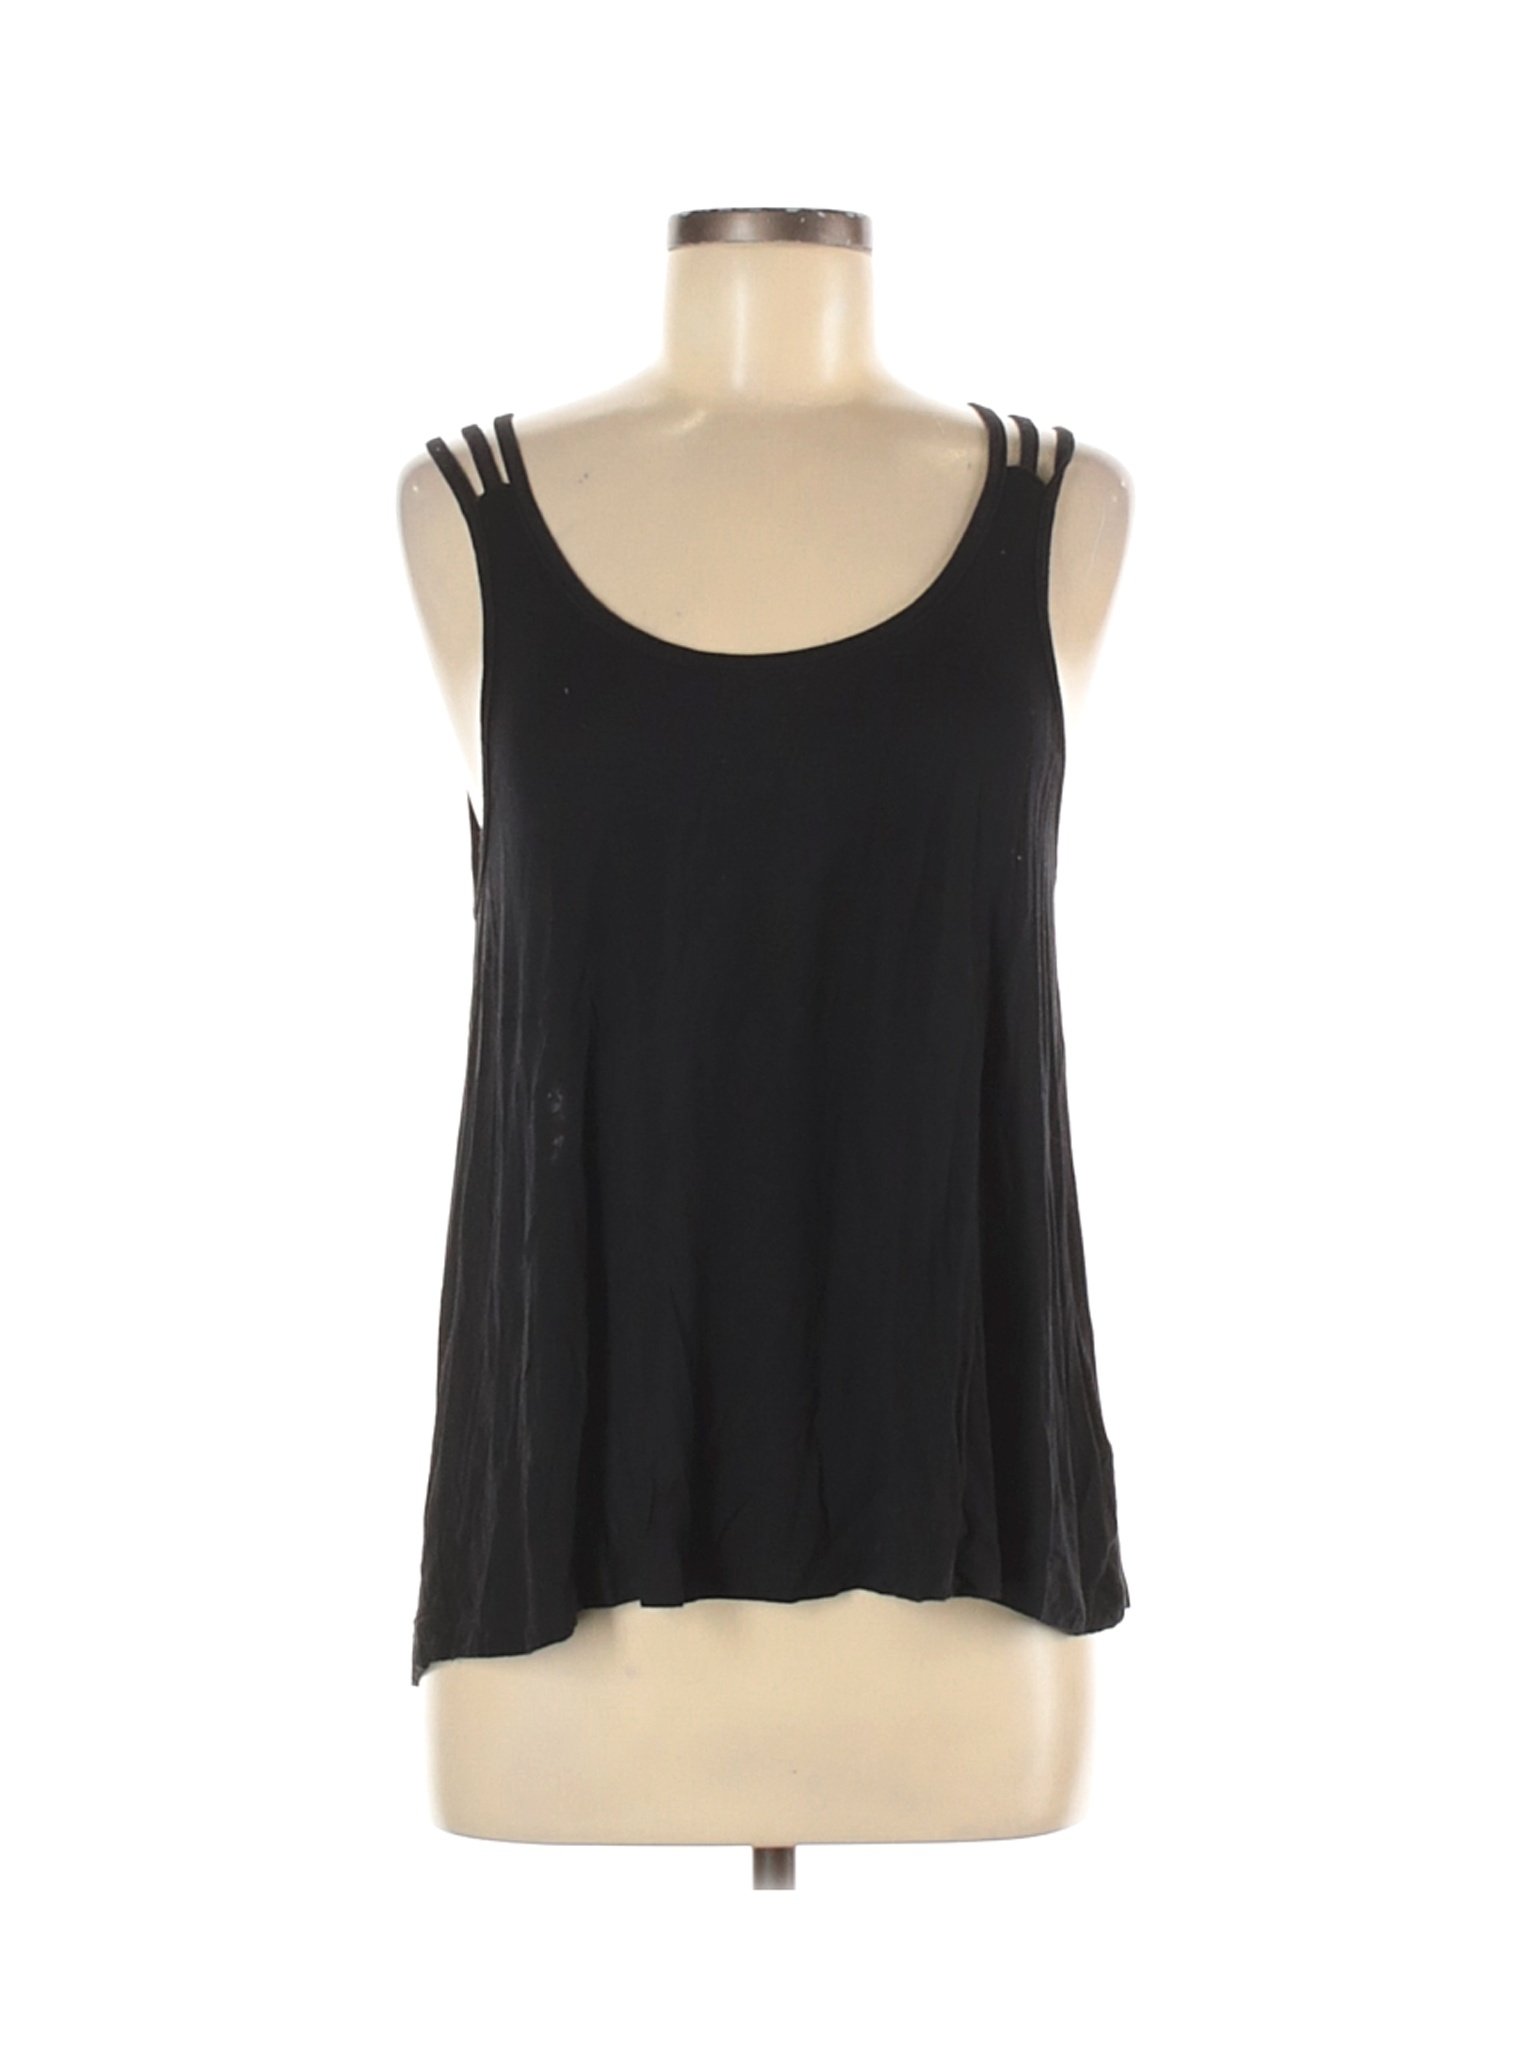 Ocean Drive Clothing Co. Women Black Sleeveless Blouse M | eBay